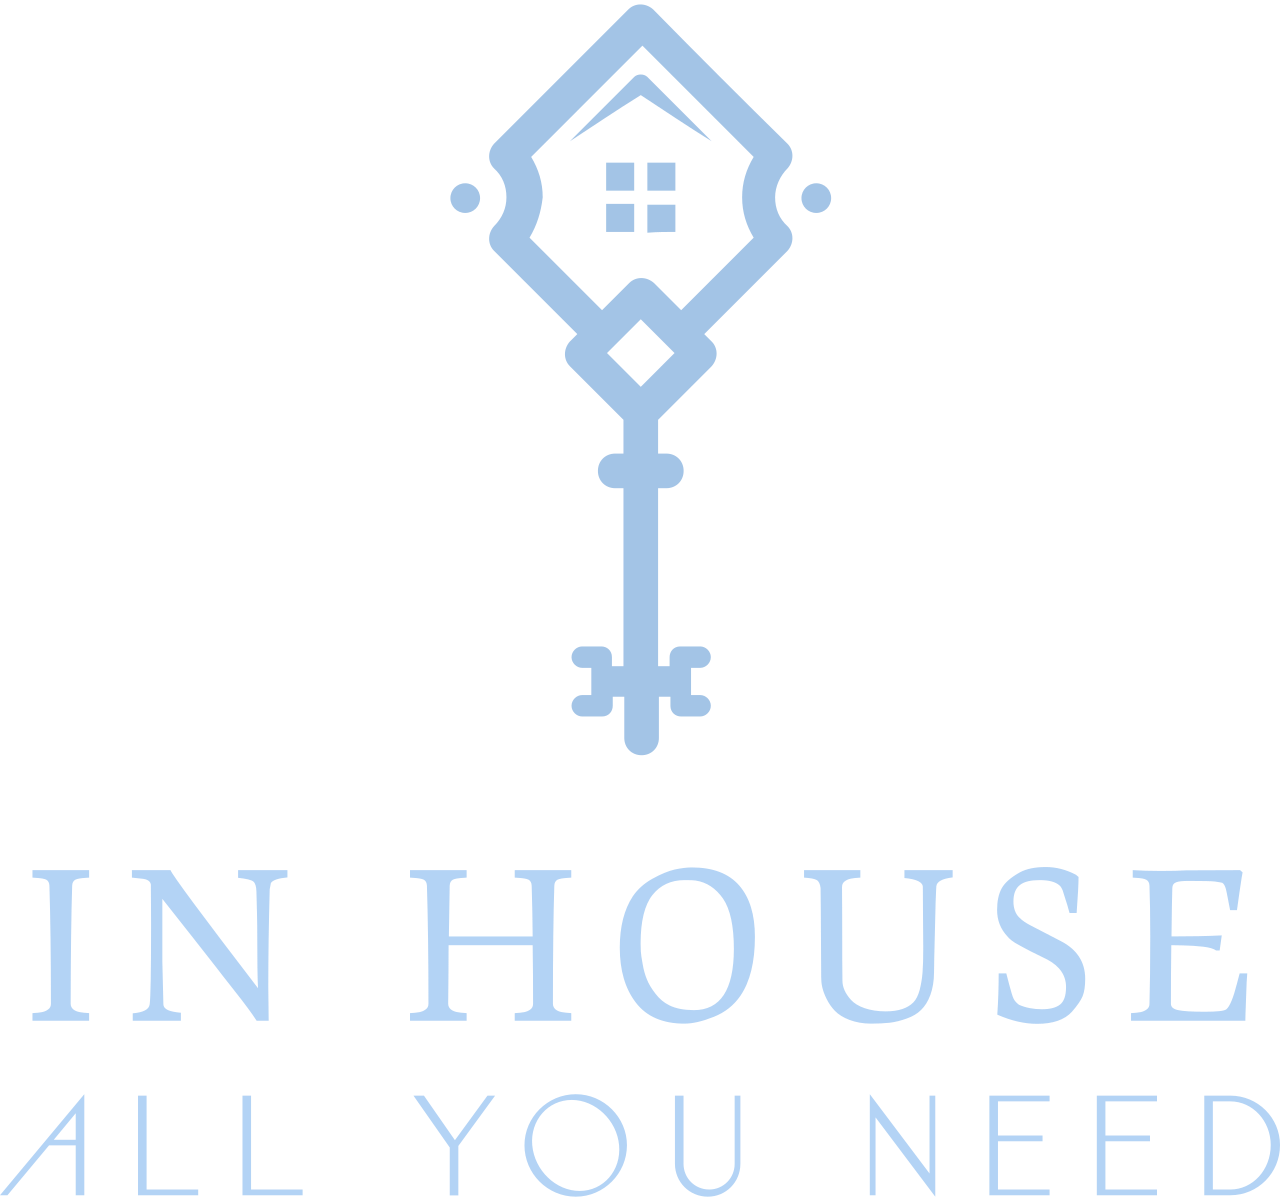 In House's logo